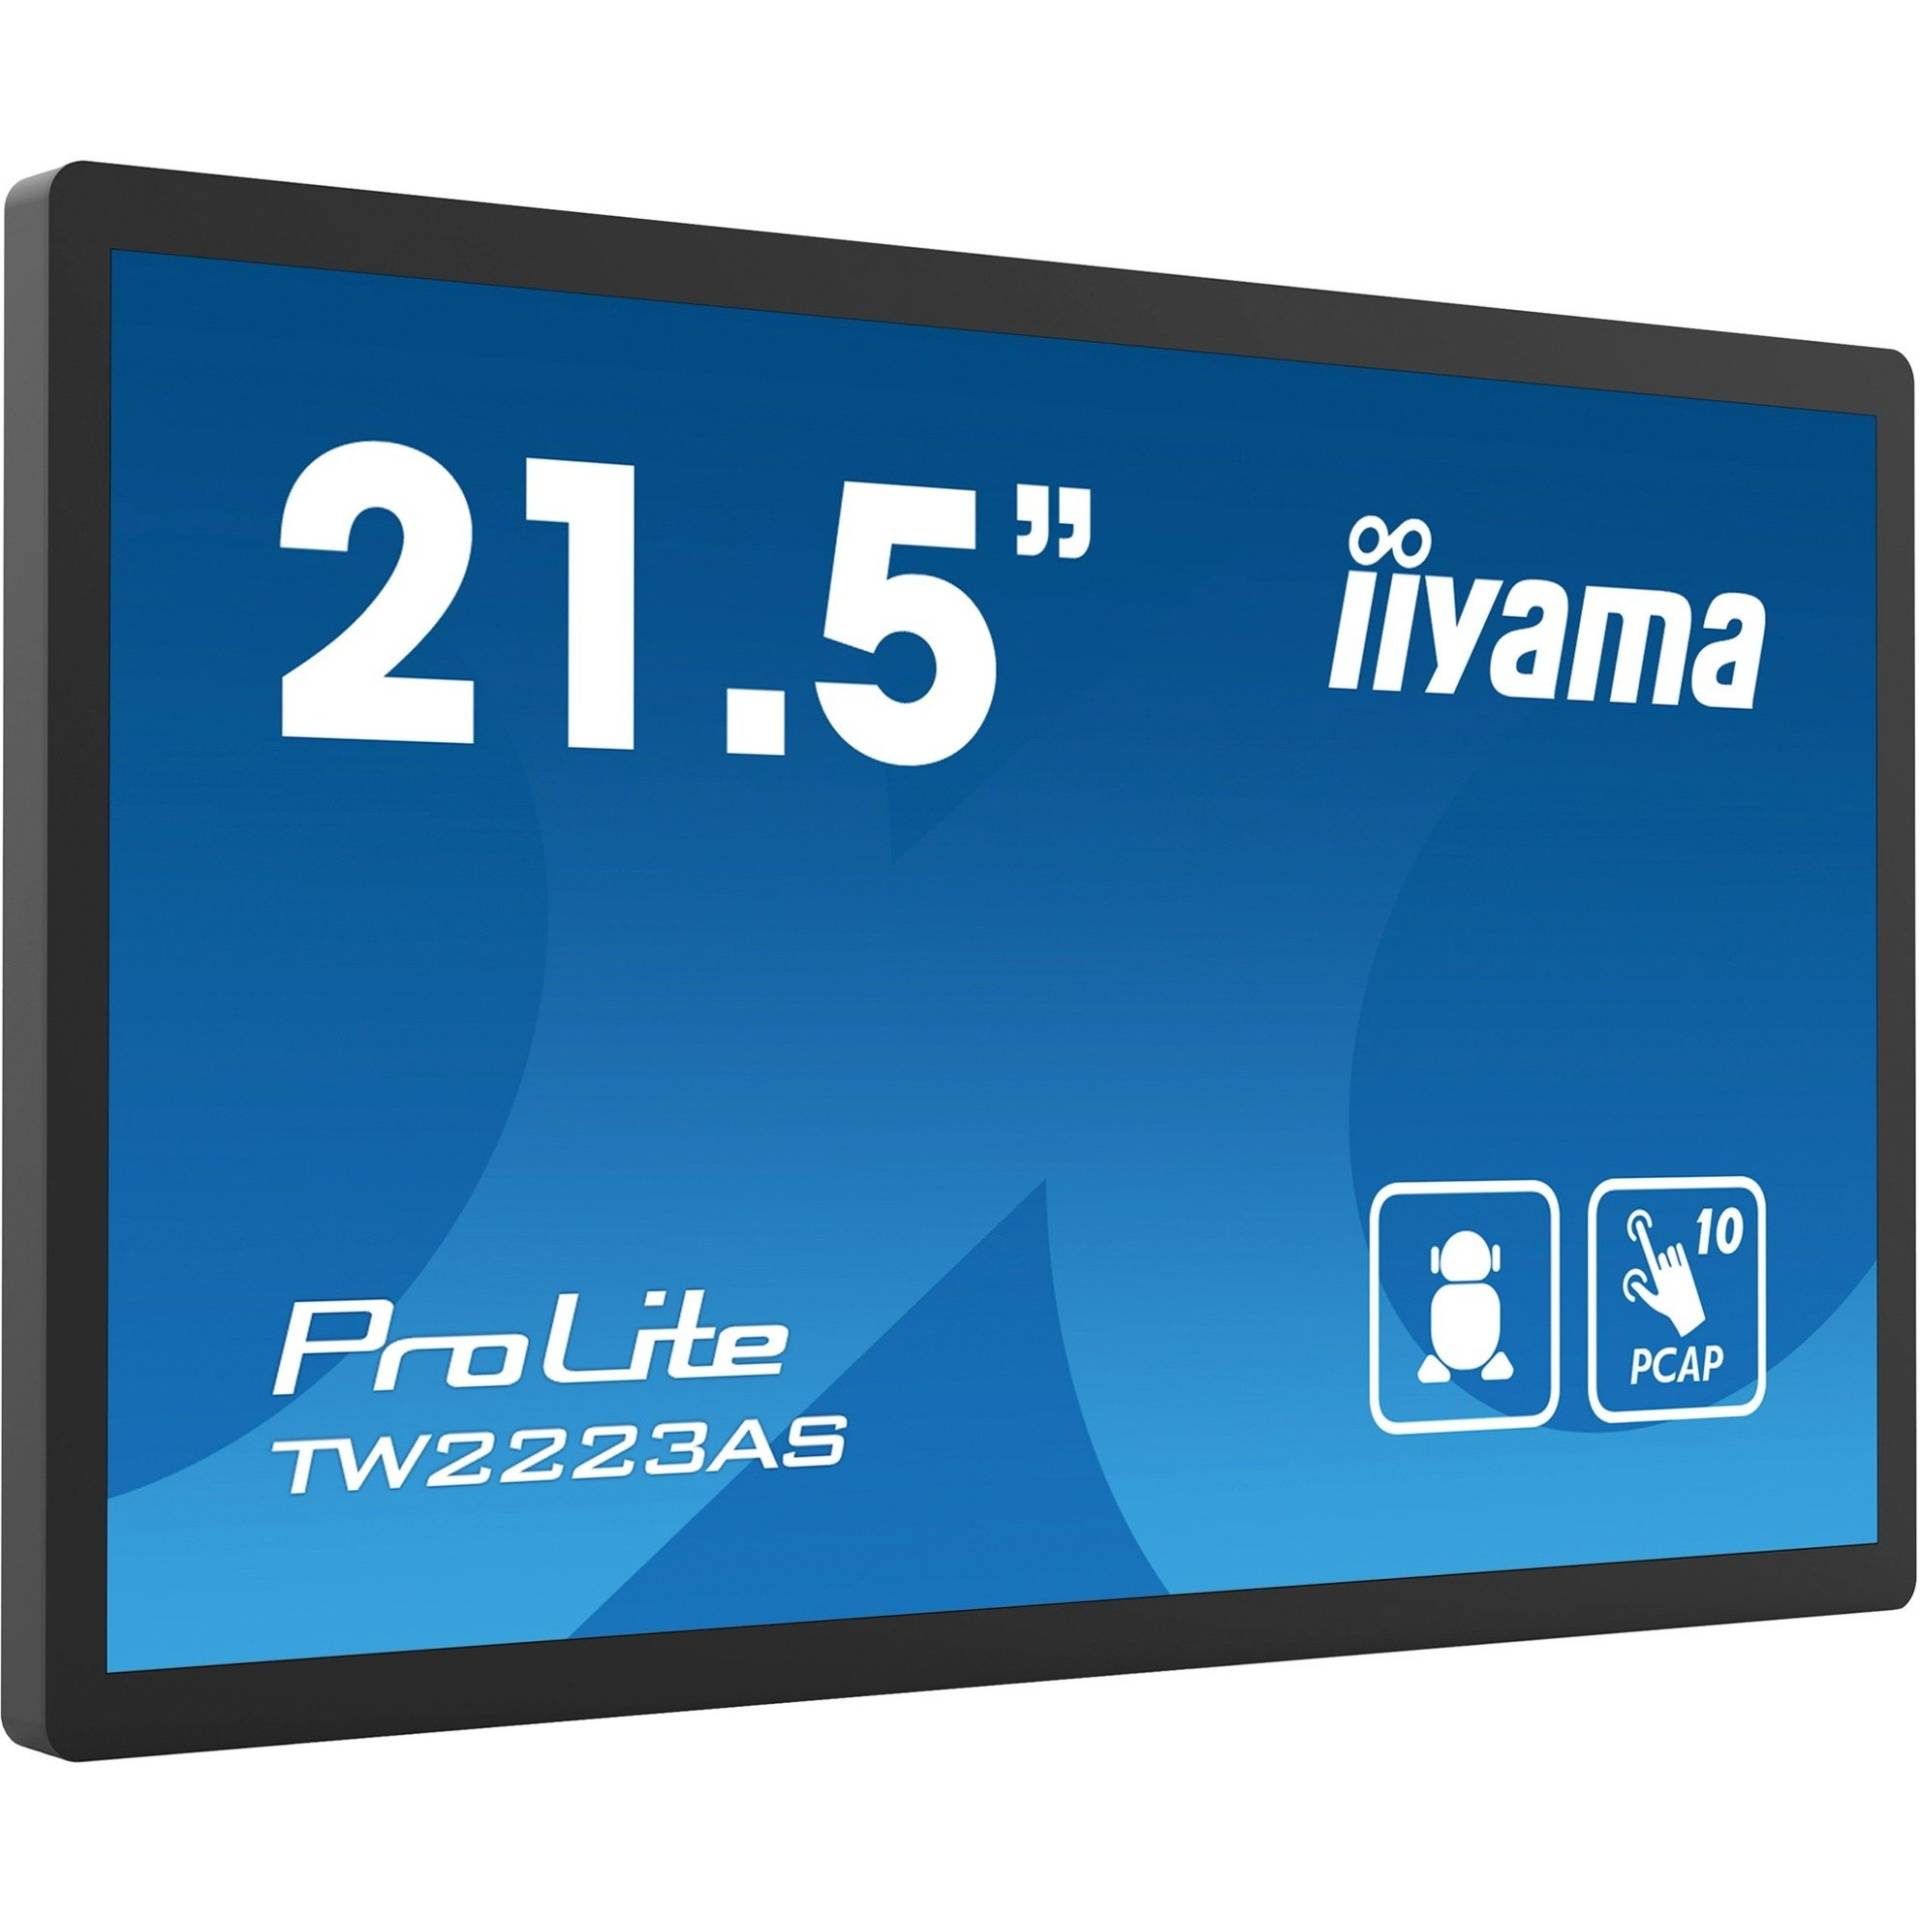 ProLite TW2223AS-B1, Public Display von Iiyama